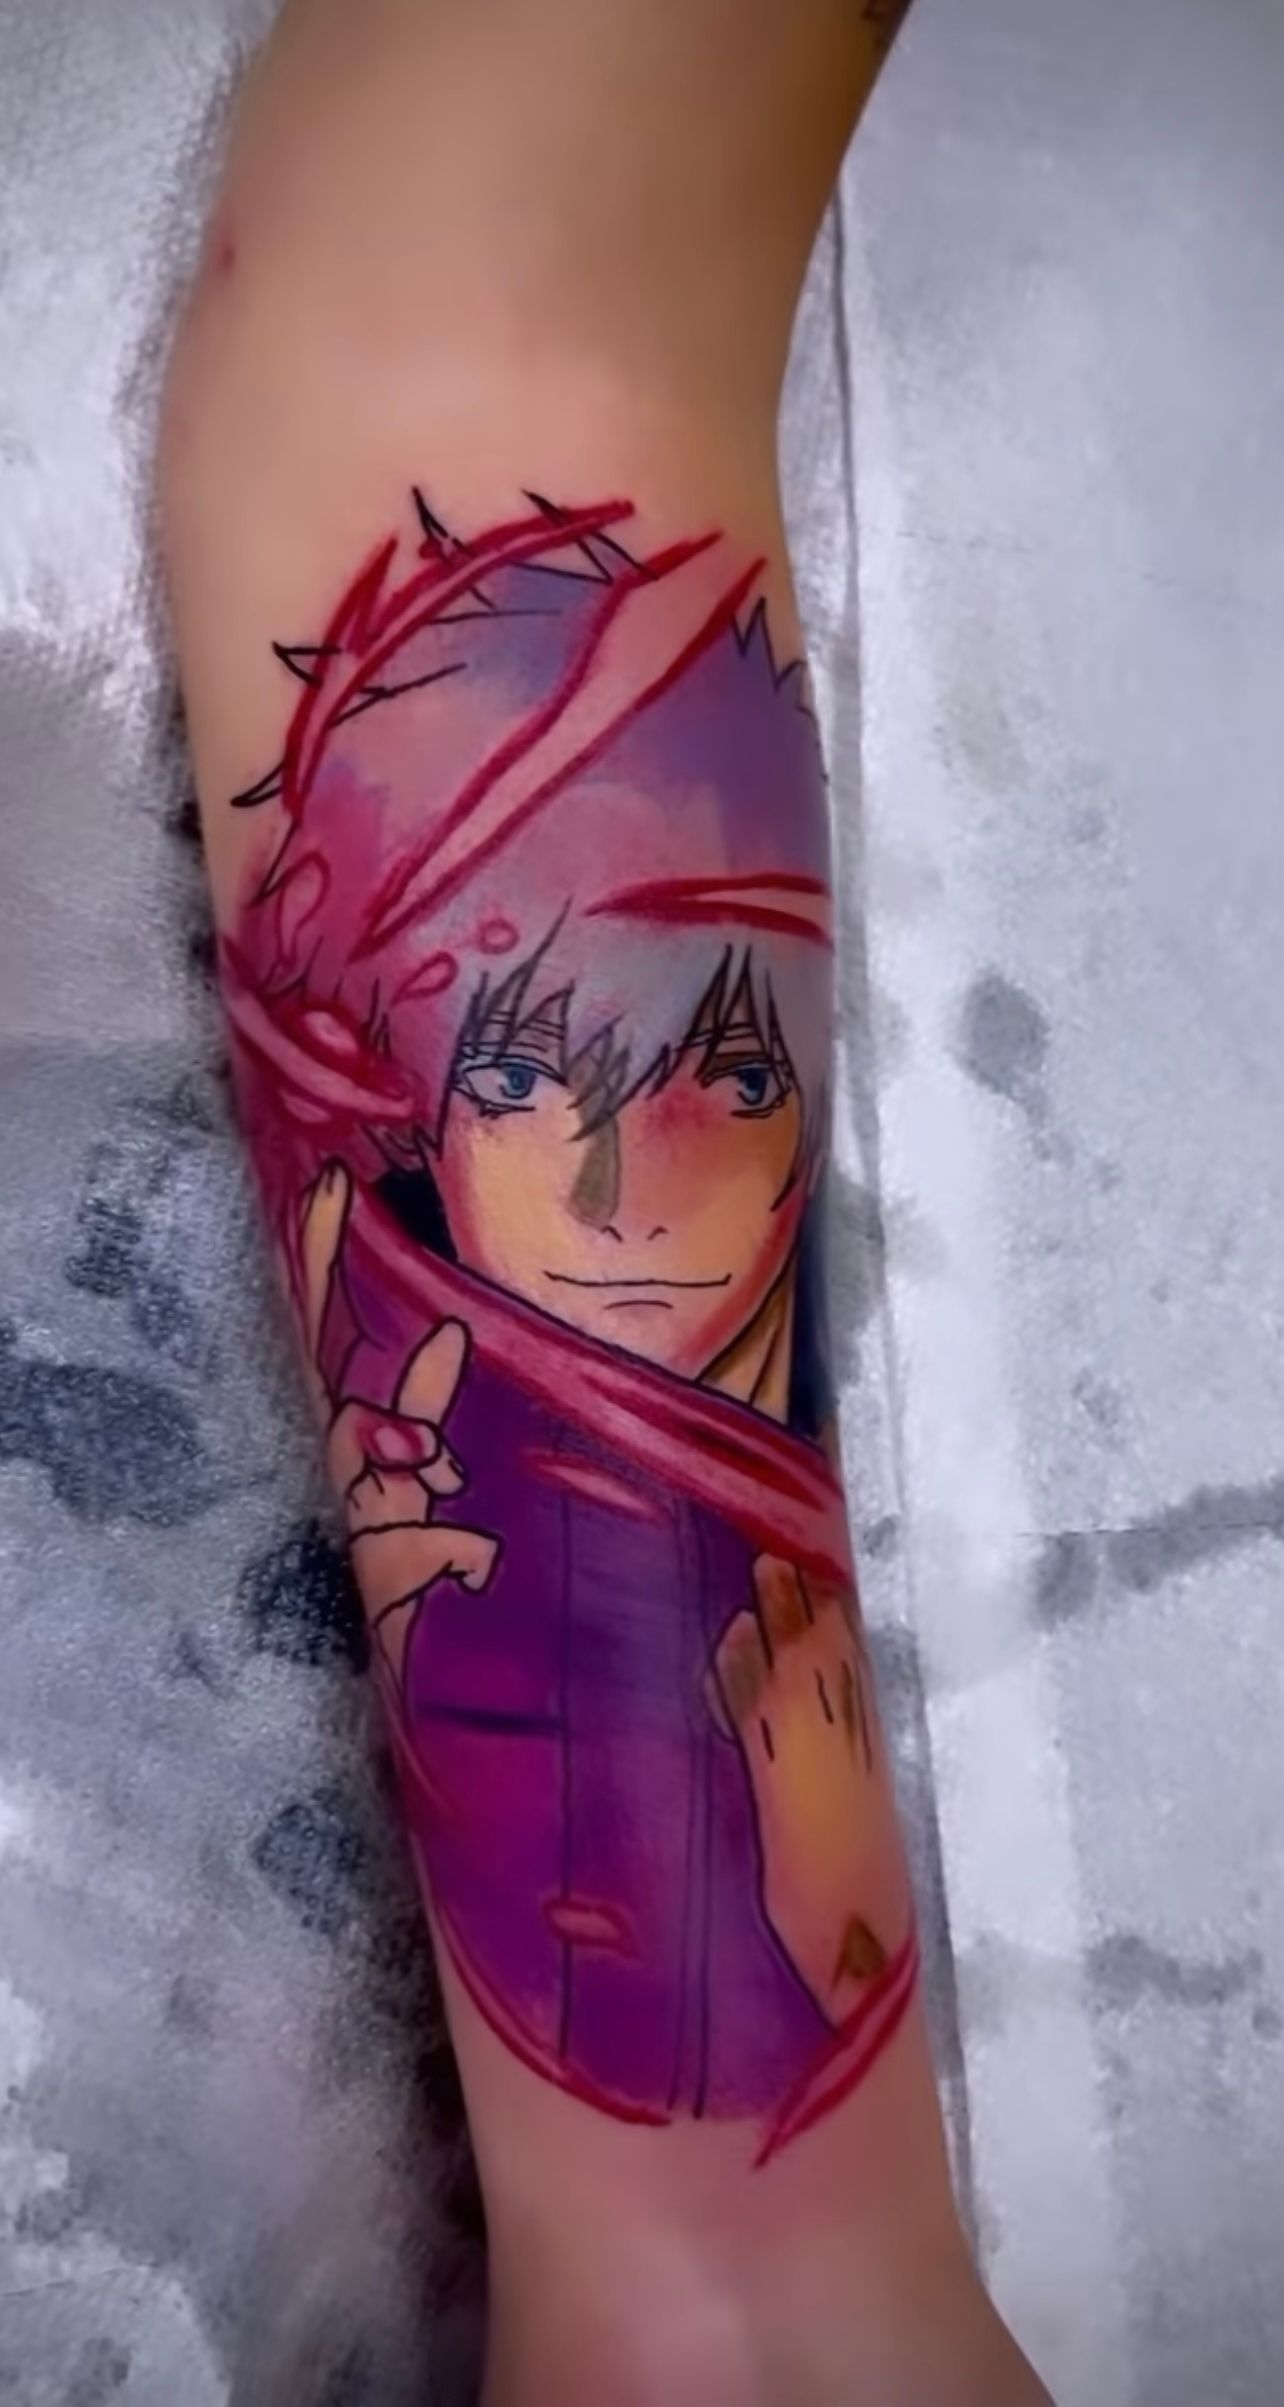 𝕃𝕀ℕ𝔼𝕎𝕆ℝ𝕂  𝕋𝔸𝕋𝕋𝕆𝕆 on Instagram Saturo Gojo  Limitless   Anime Jujutsu Kaisen Design I did  Tatuagens de anime Tatuagem de  arte Tatuagens nerds